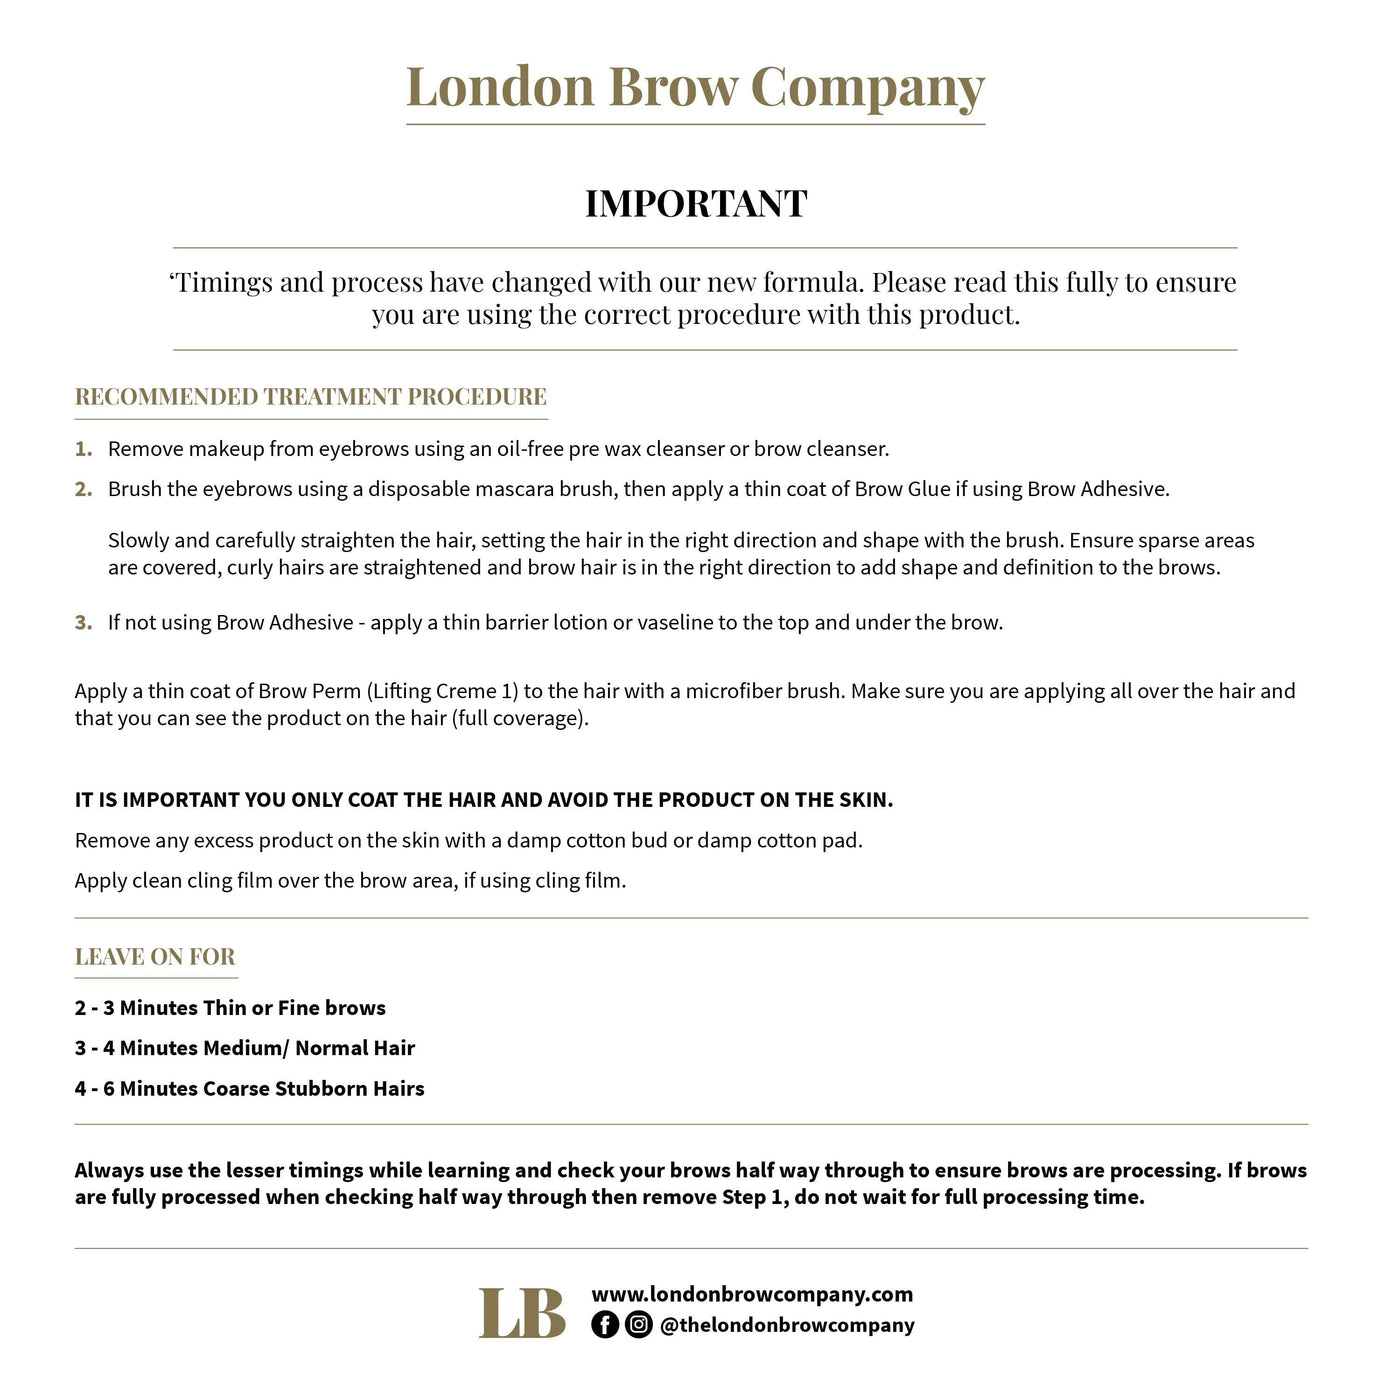 London Brow Pro Lamination Instructions - Advanced - The London Brow Company